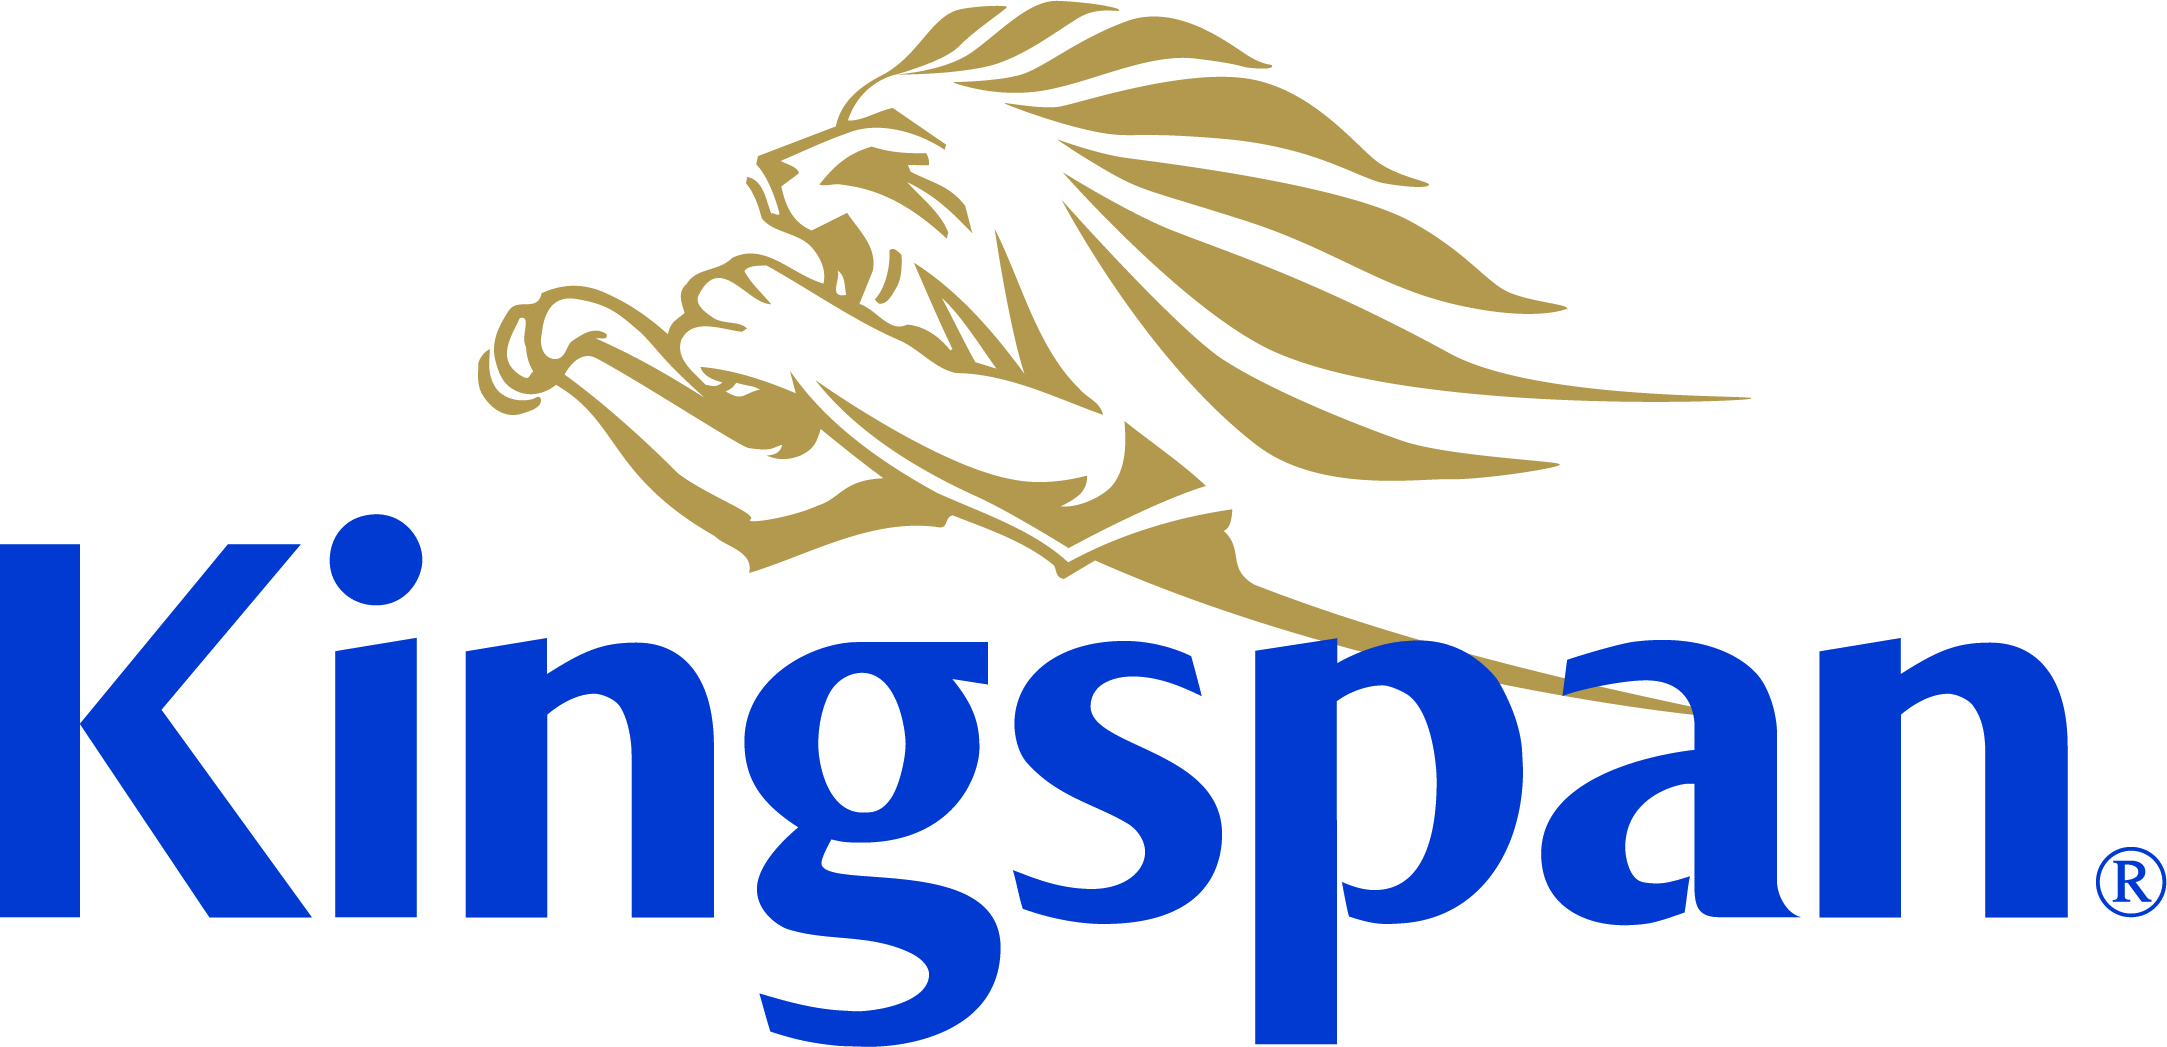 www.kingspan.com/us/en-us/about-kingspan/kingspan-insulated-panels